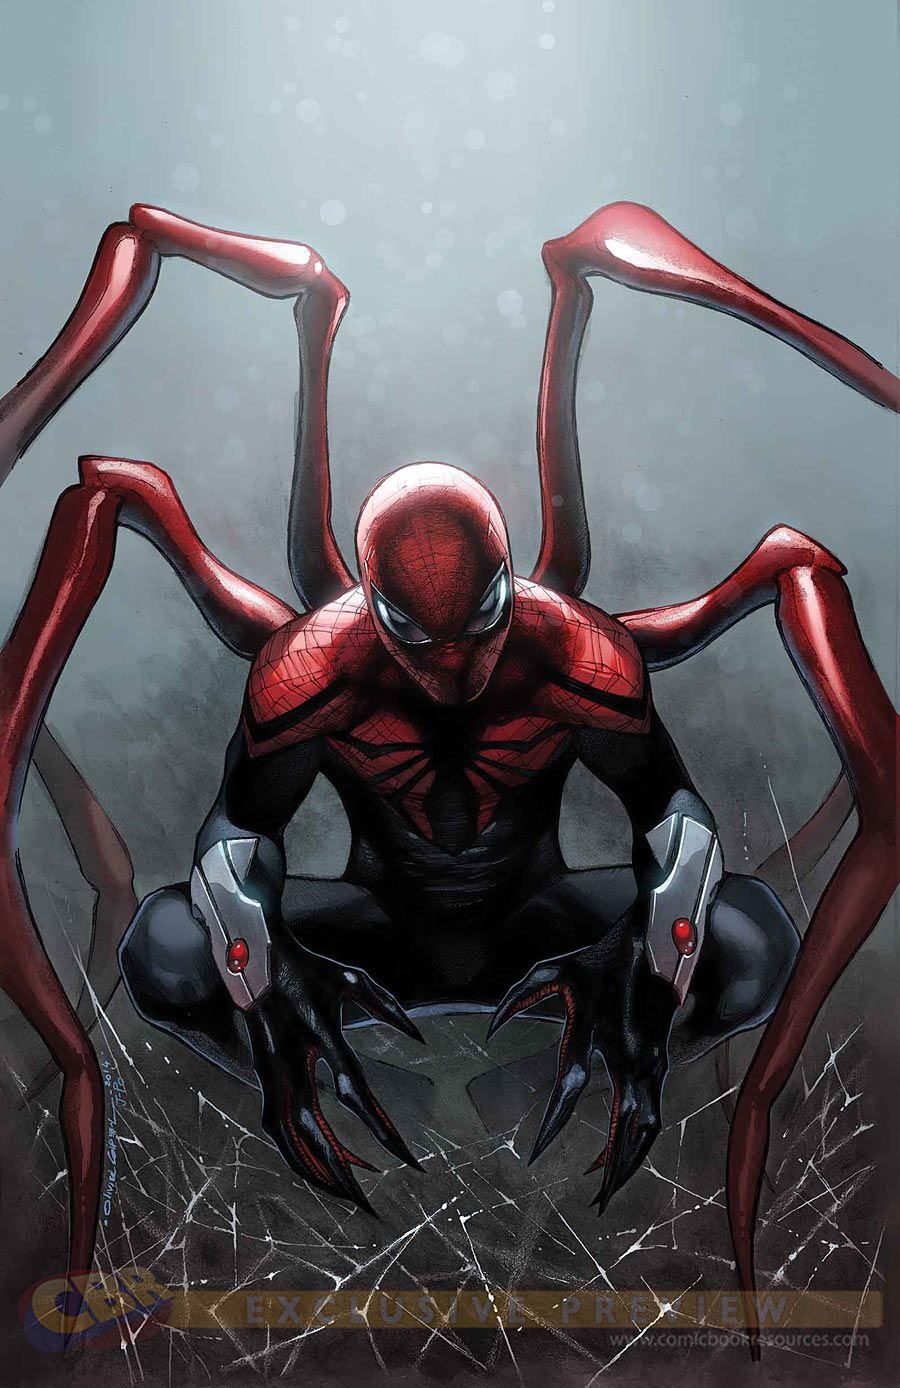 Spiderman Theme Wallpaper Download